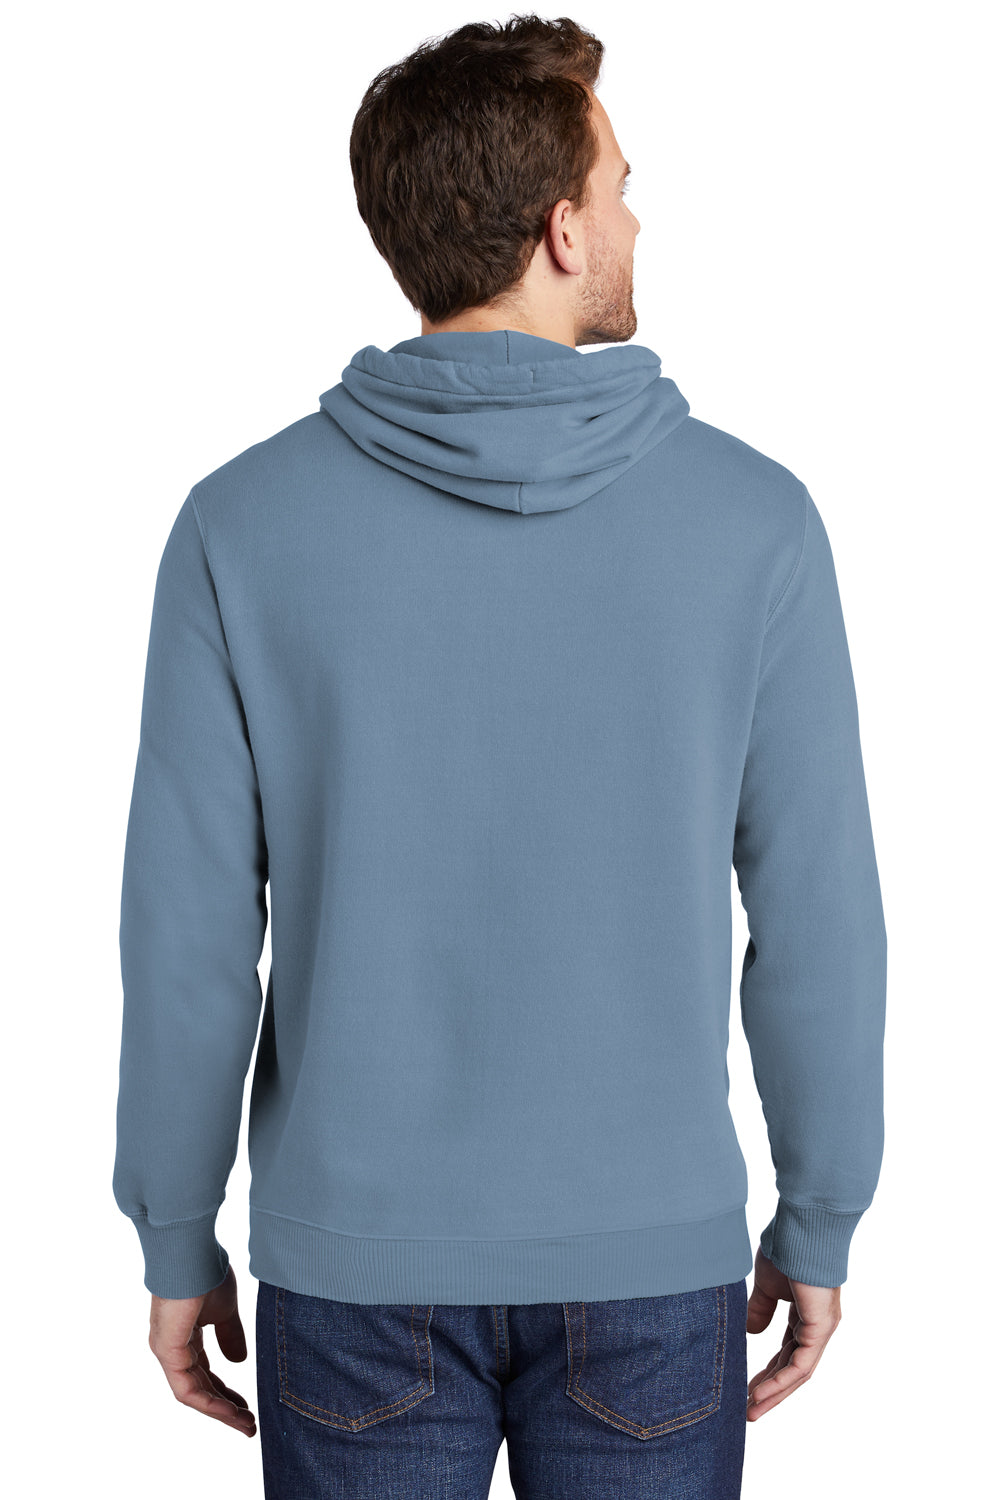 Port & Company PC098H Mens Beach Wash Fleece Hooded Sweatshirt Hoodie Denim Blue Back